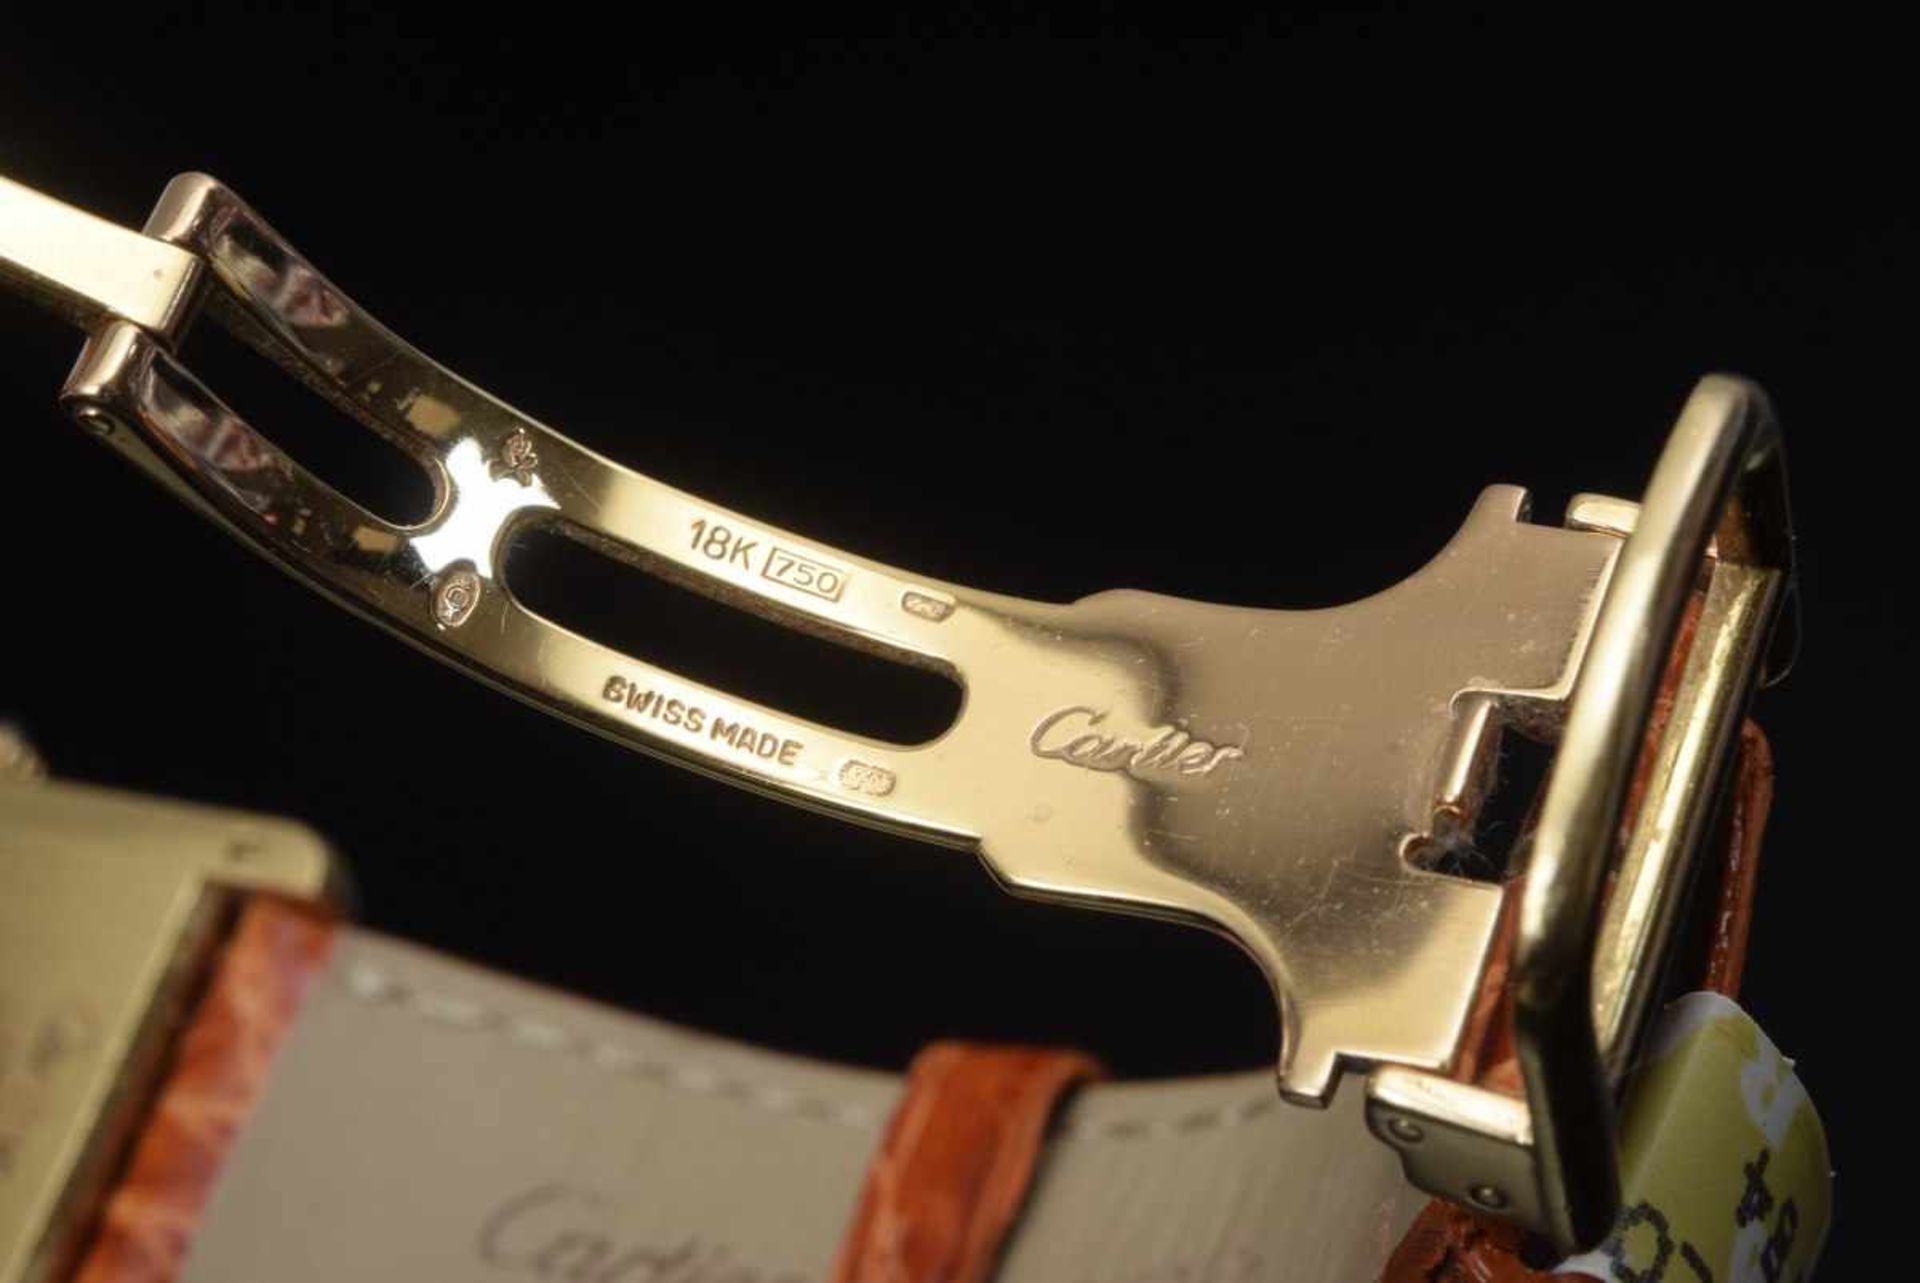 GG 750 Cartier "Tank Louis Cartier "Ladies watch, quartz movement, white dial with roman numerals, - Image 5 of 7